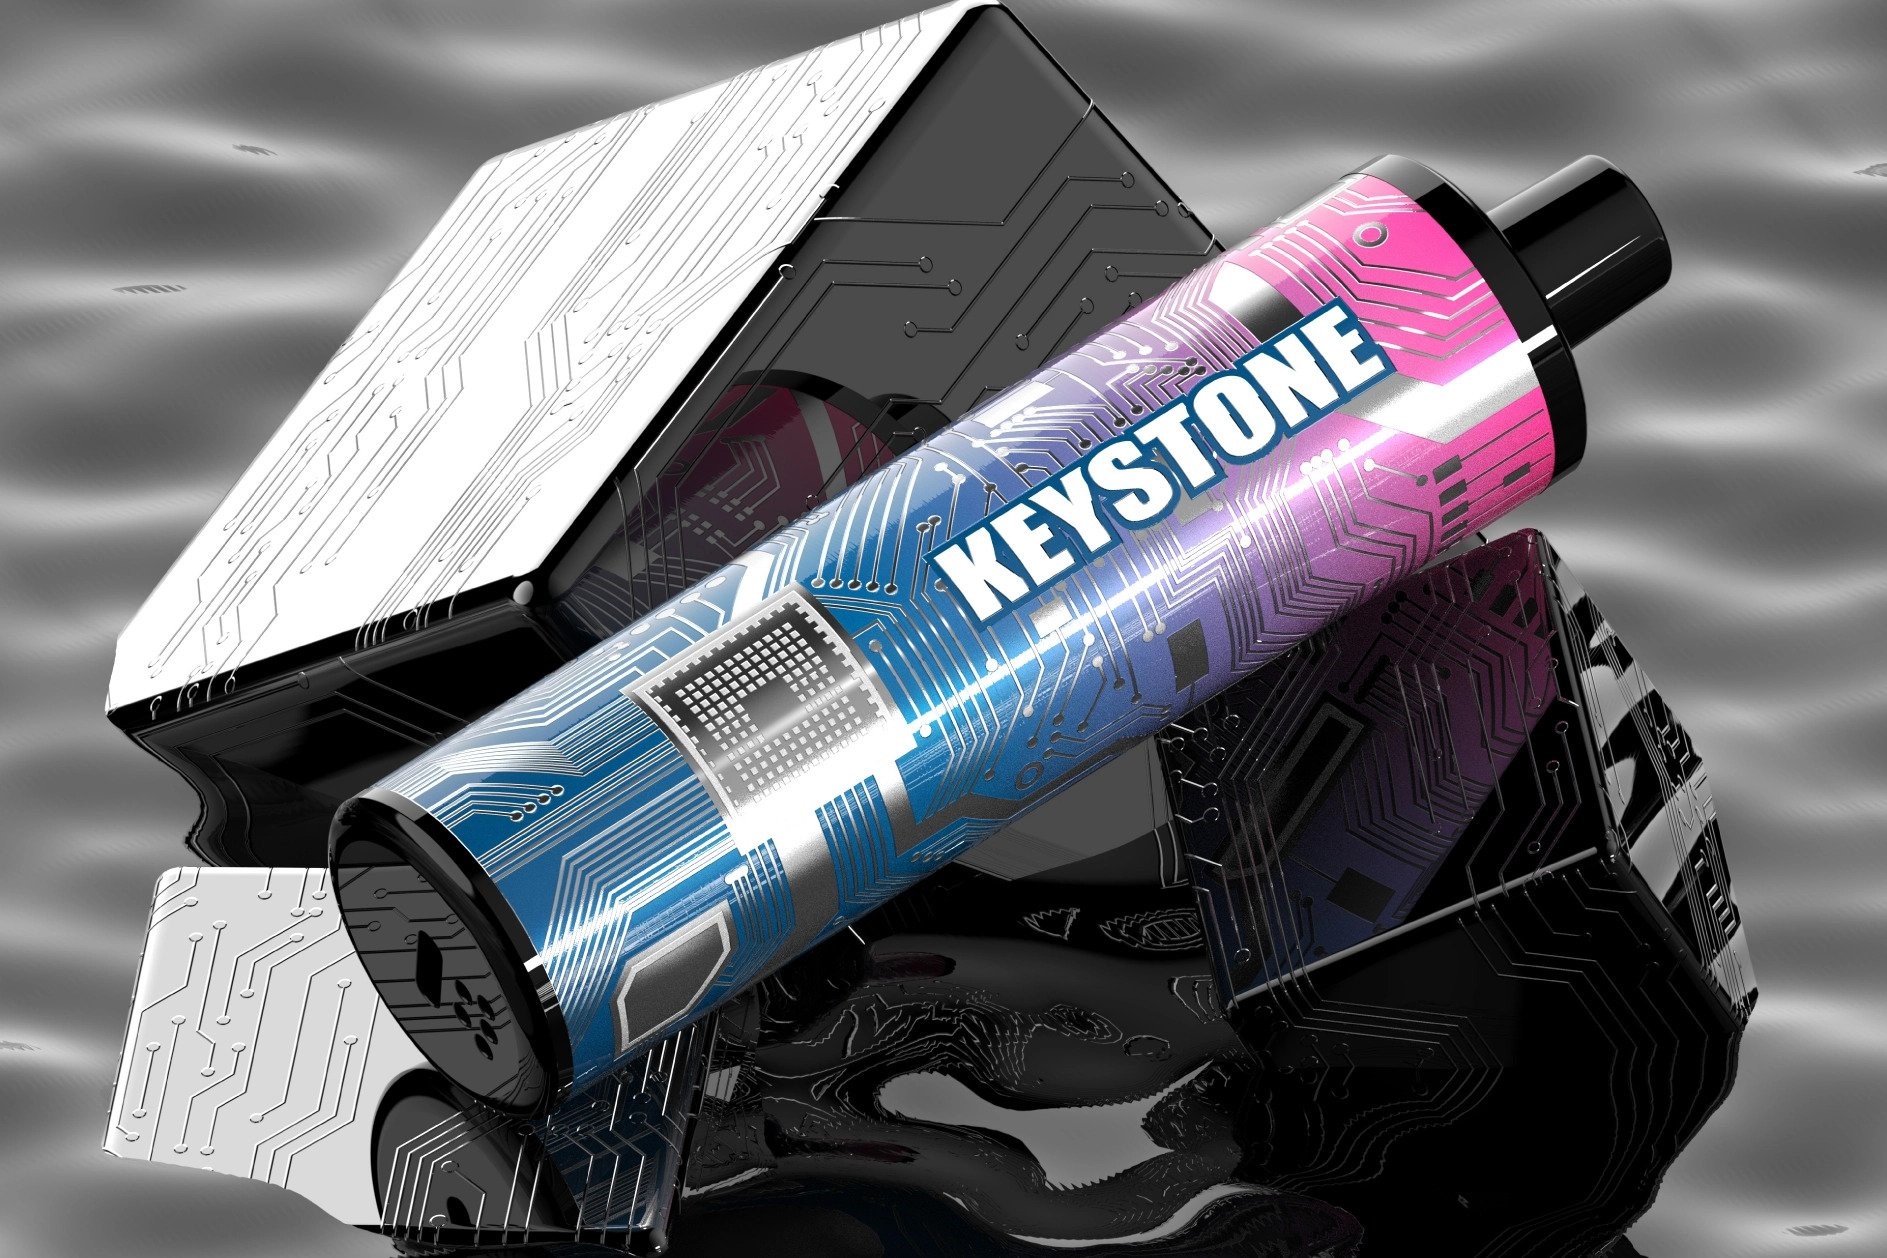 Keystone Vape